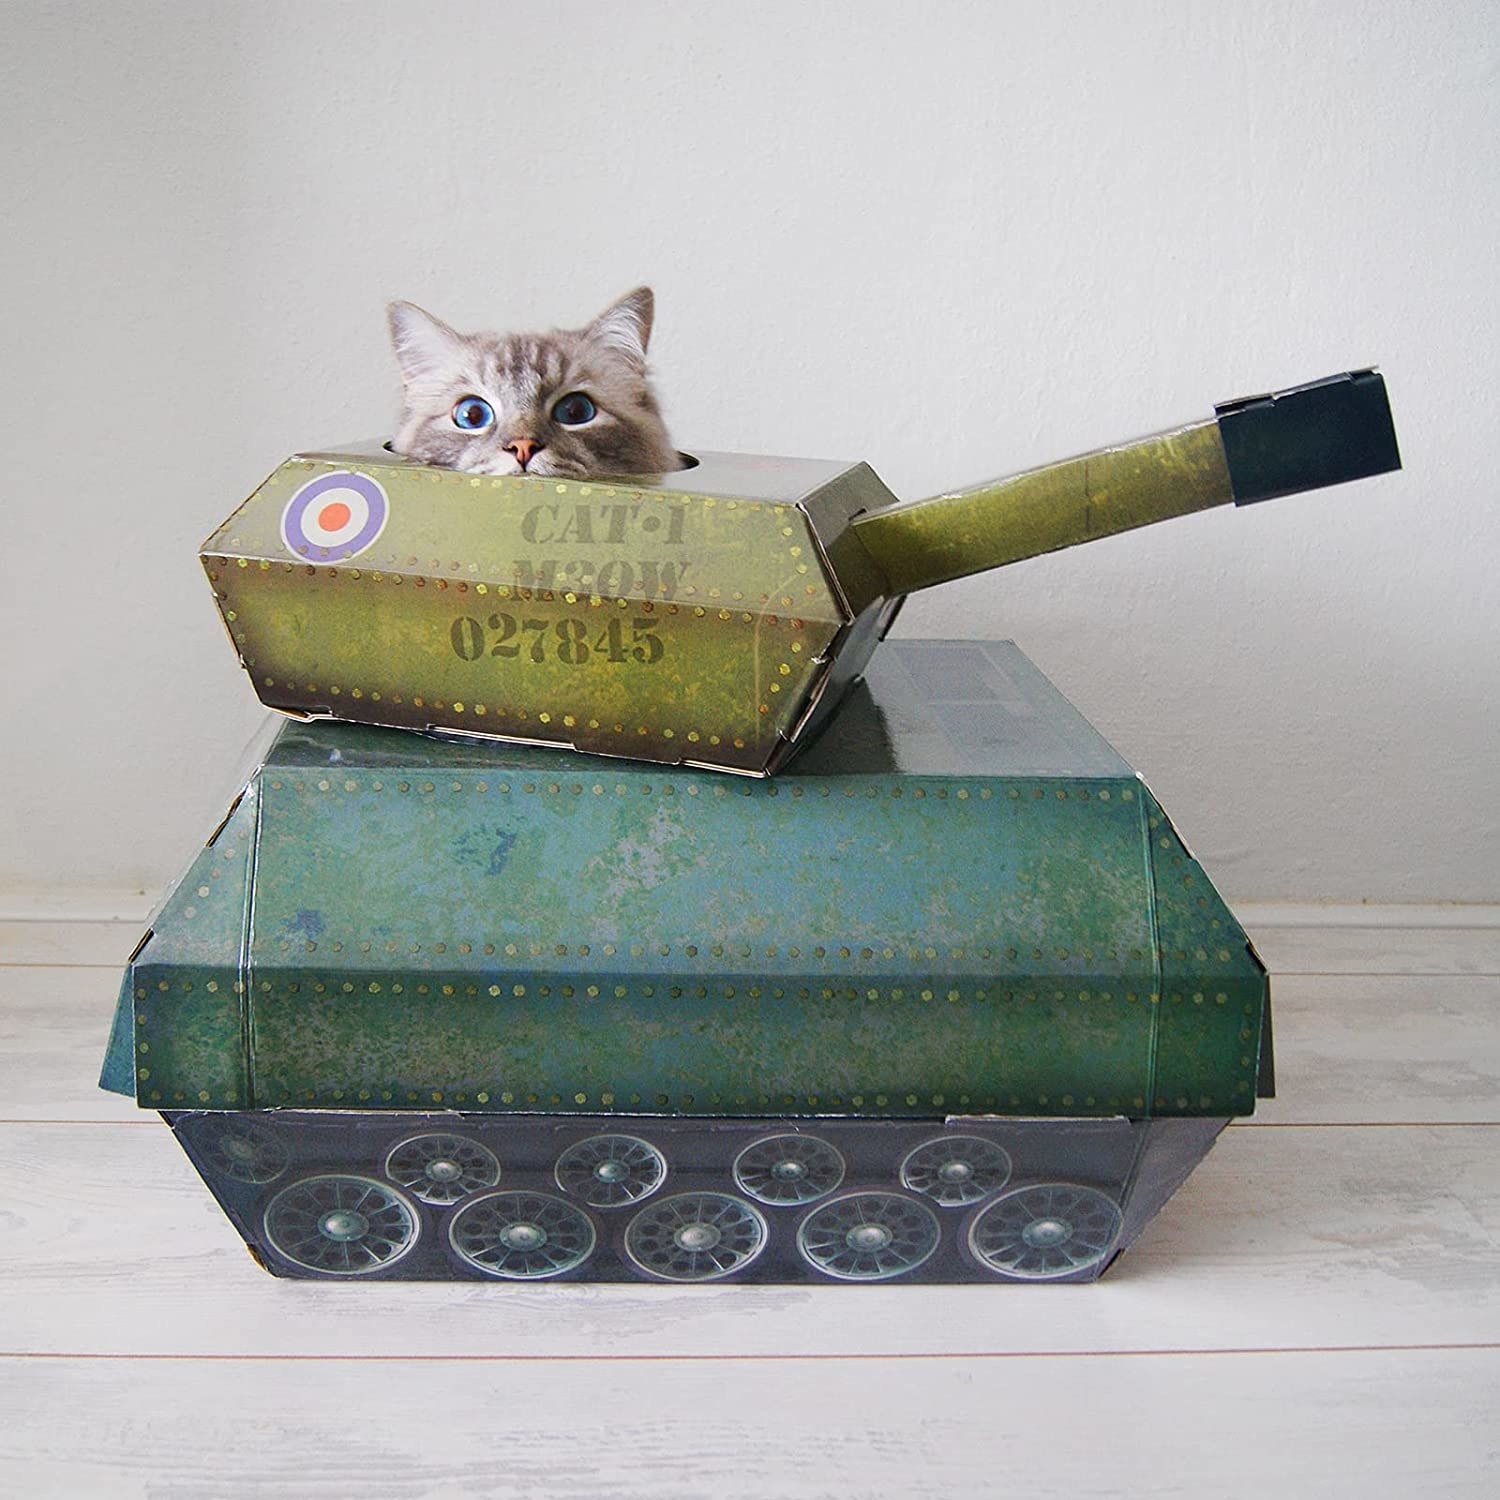 a cat peeking out of a cardboard tank